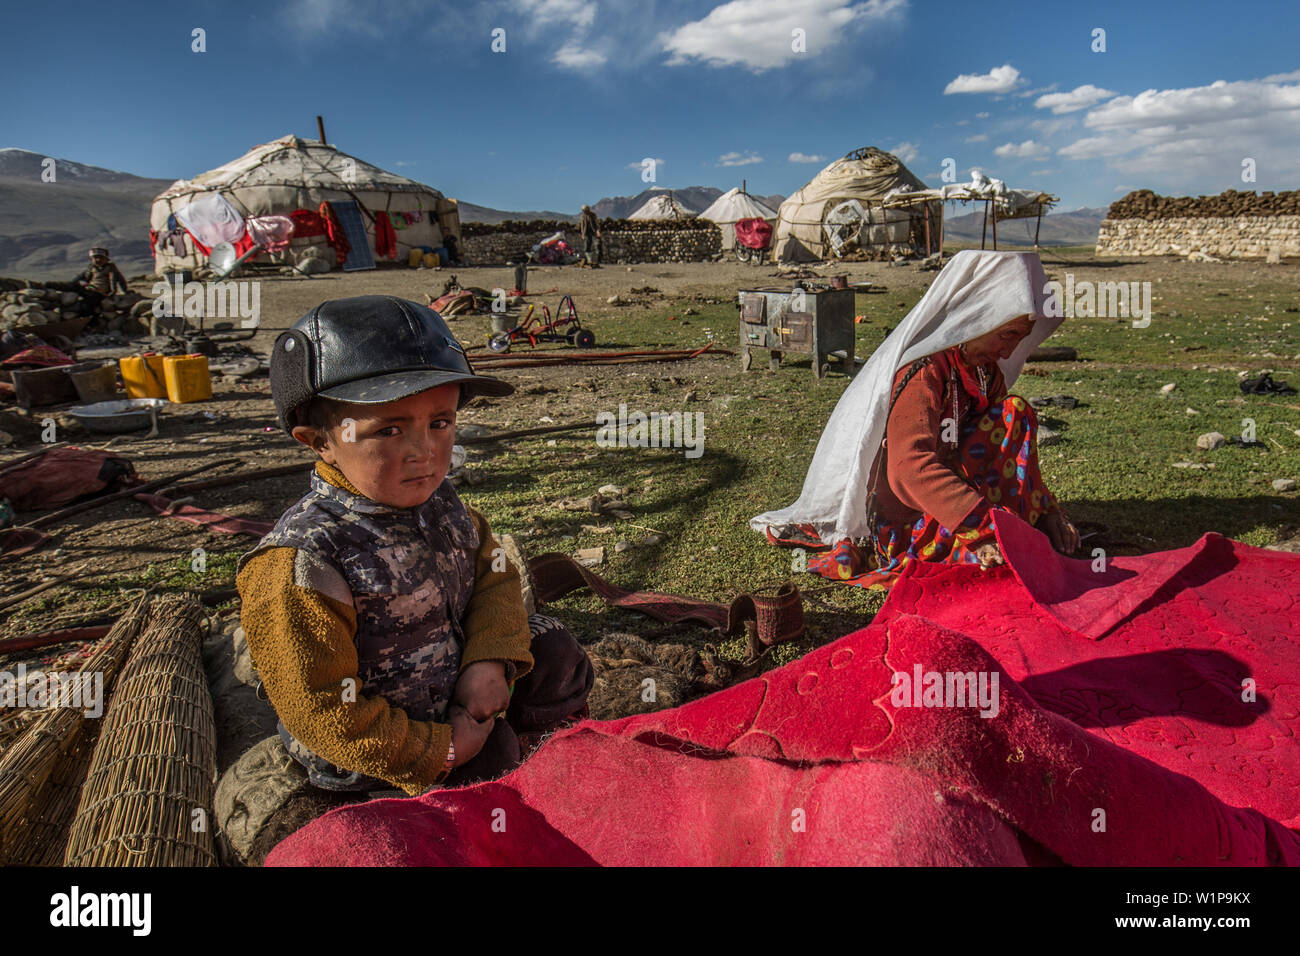 Building a kyrgyz yurt, Pamir, Afghanistan, Asia Stock Photo